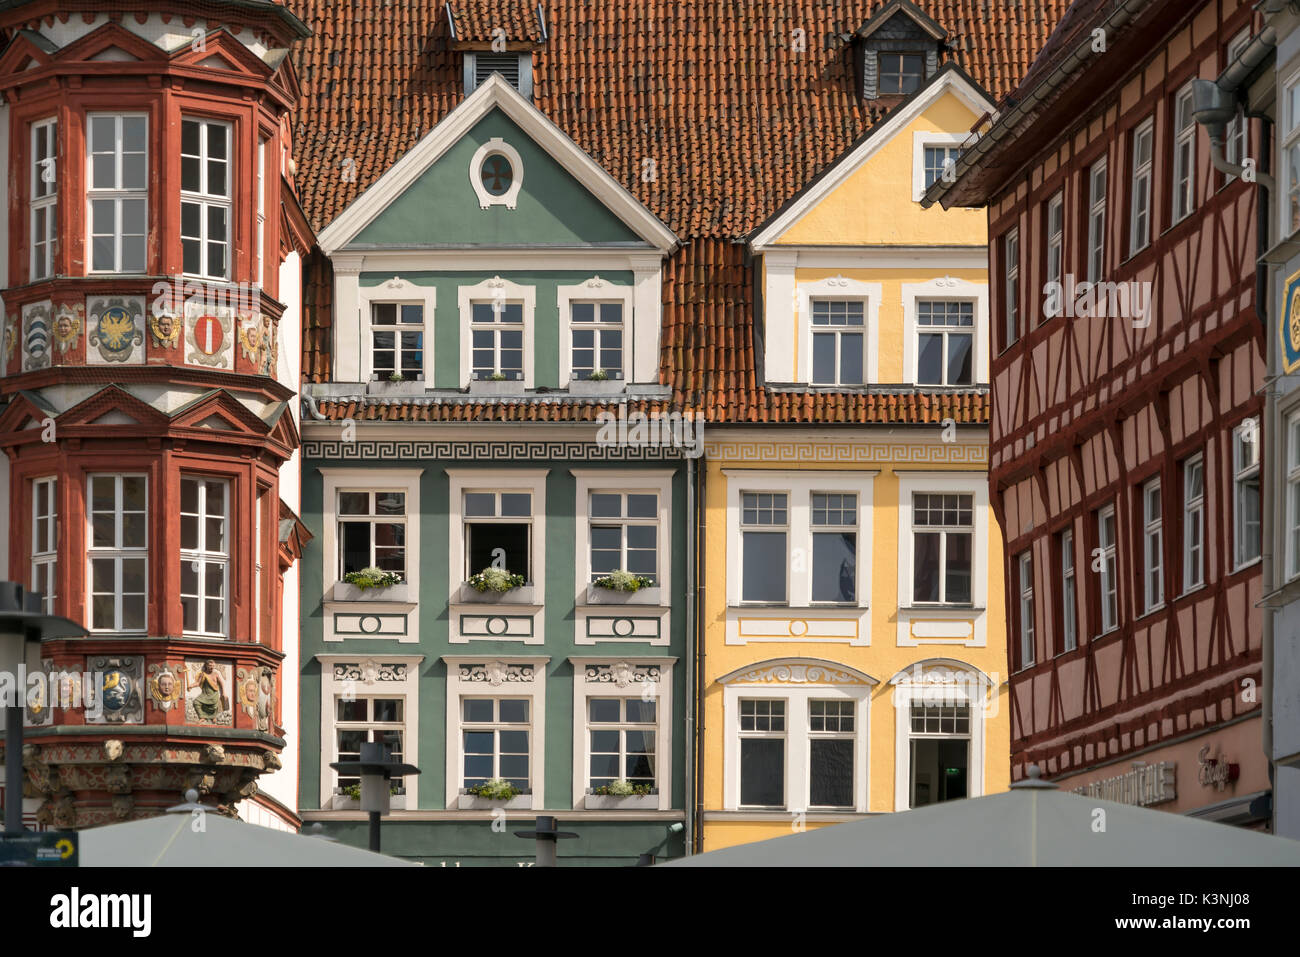 Fassaden der Altstadt in Coburg, Oberfranken, Bayern, Deutschland |  facades of the old town, Coburg, Upper Franconia, Bavaria, Gemany Stock Photo